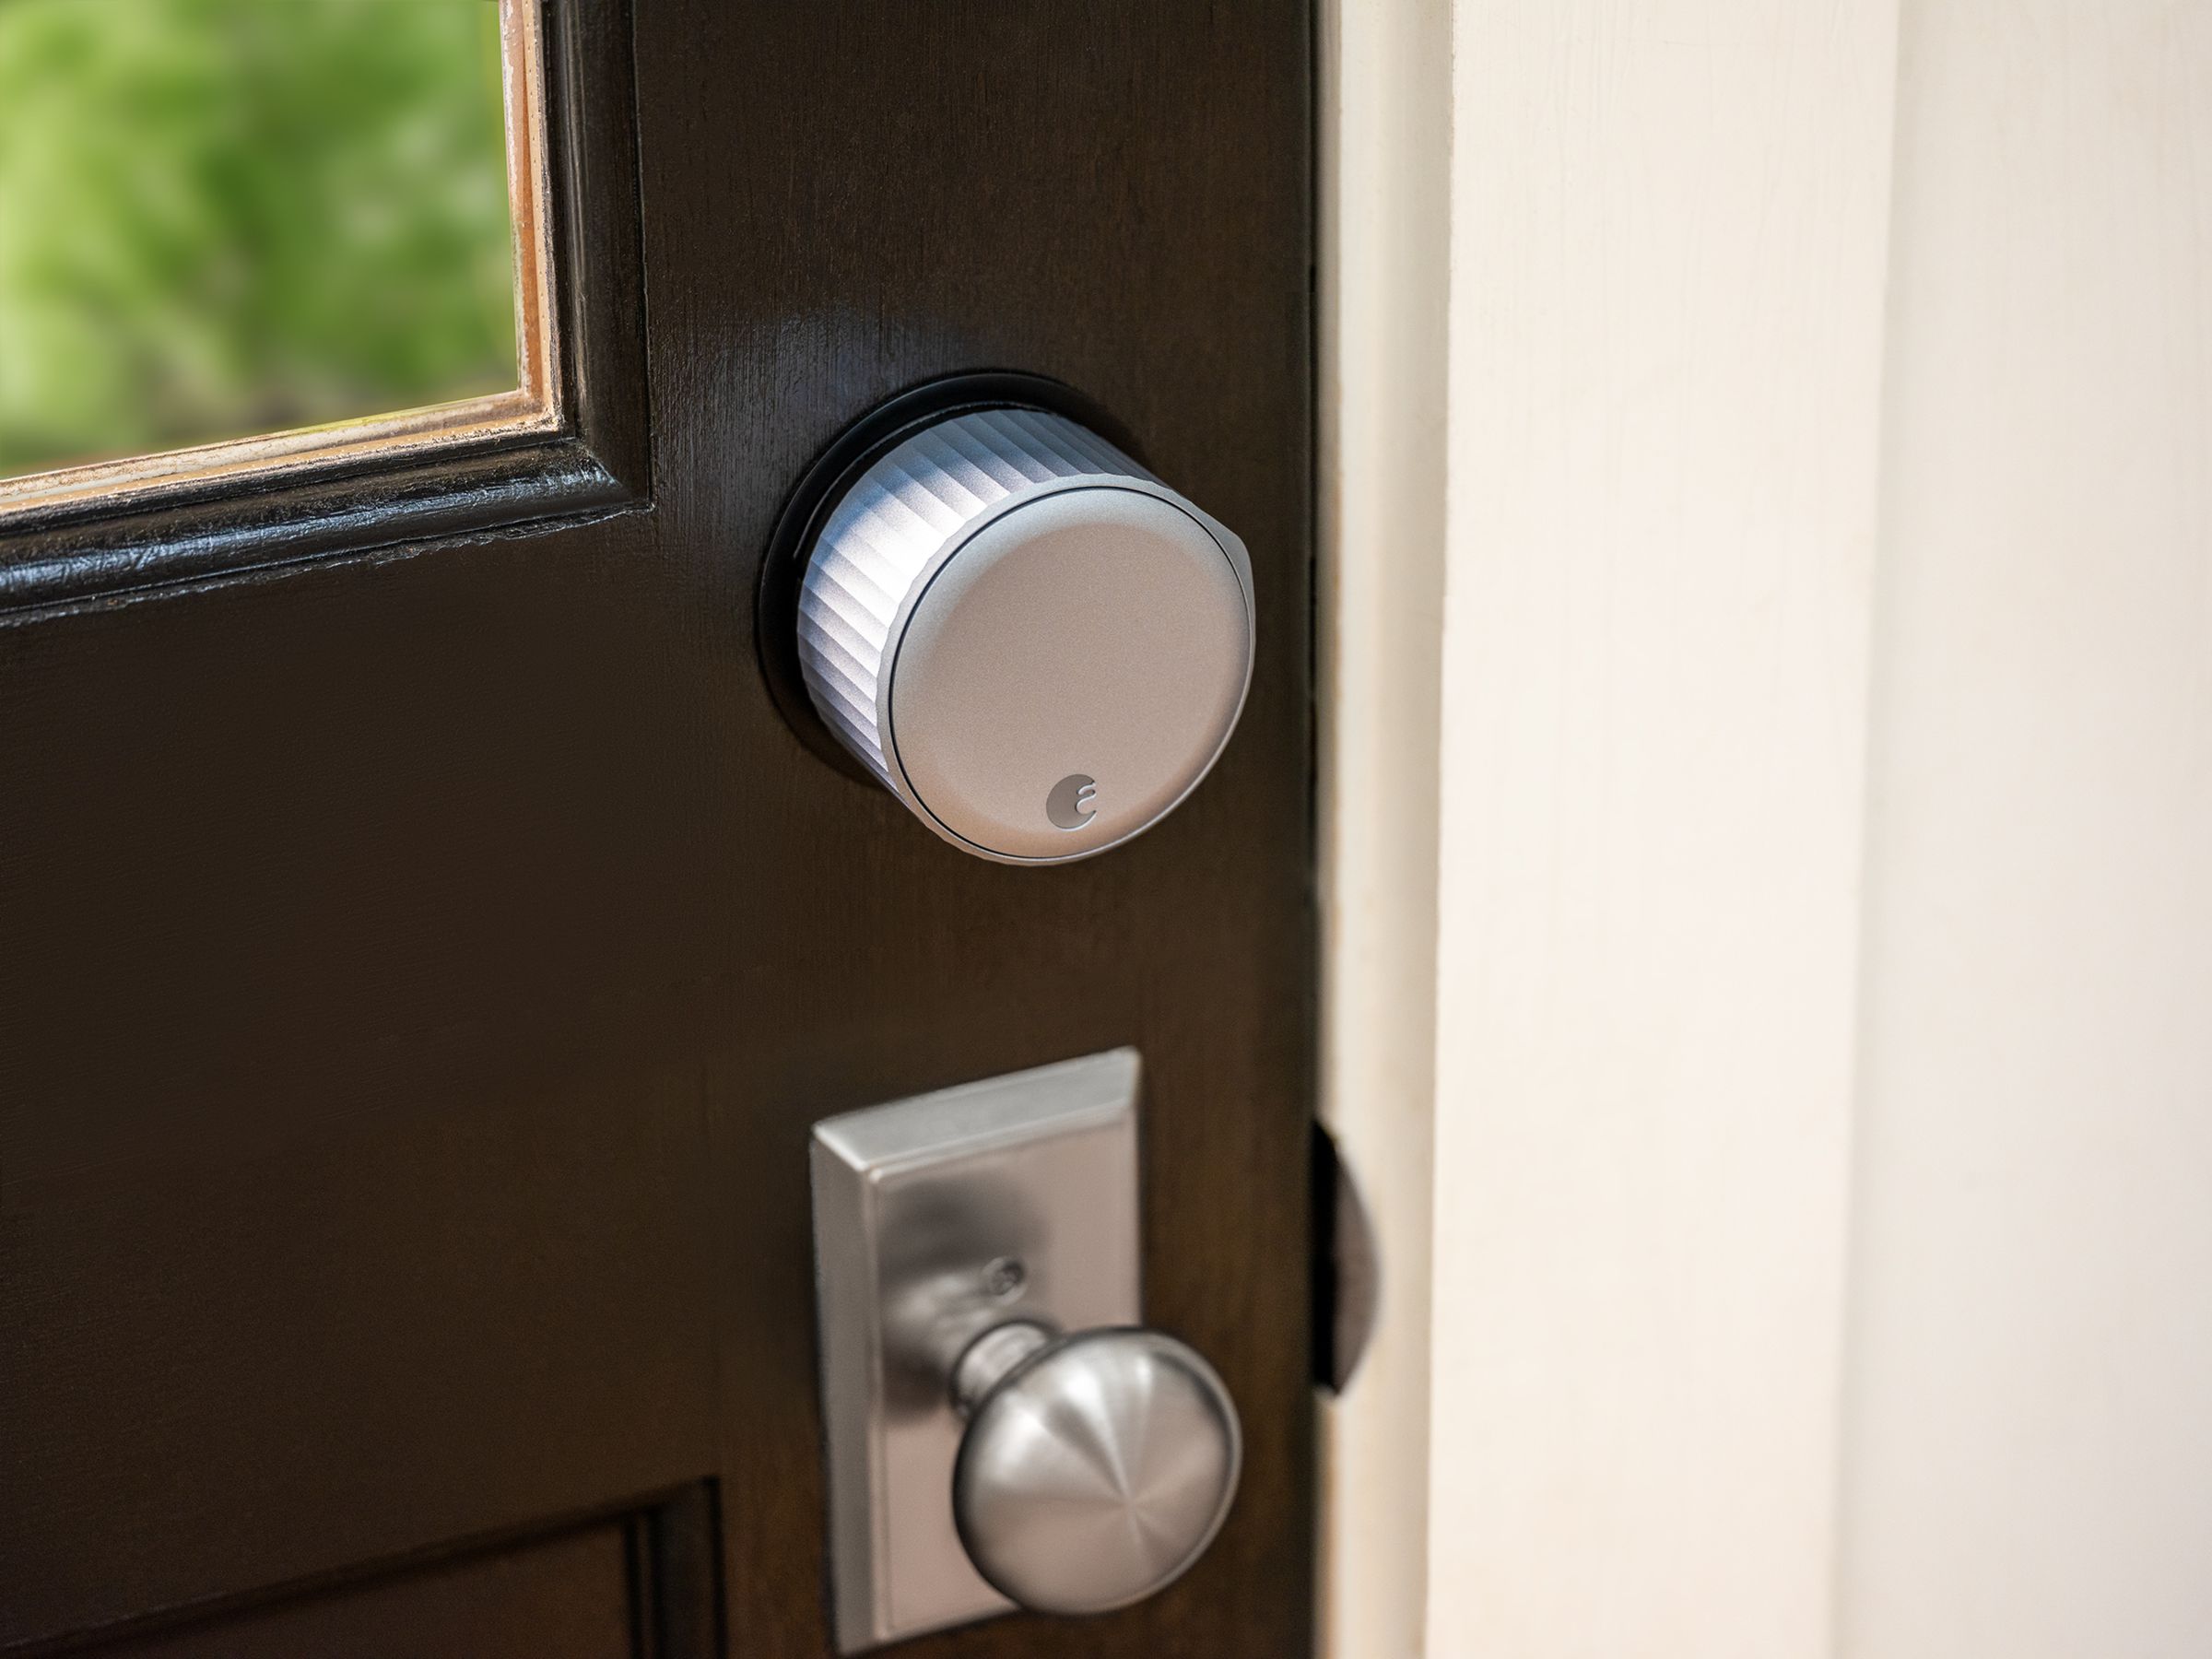 August Wi-Fi Smart Lock installed on a brown door